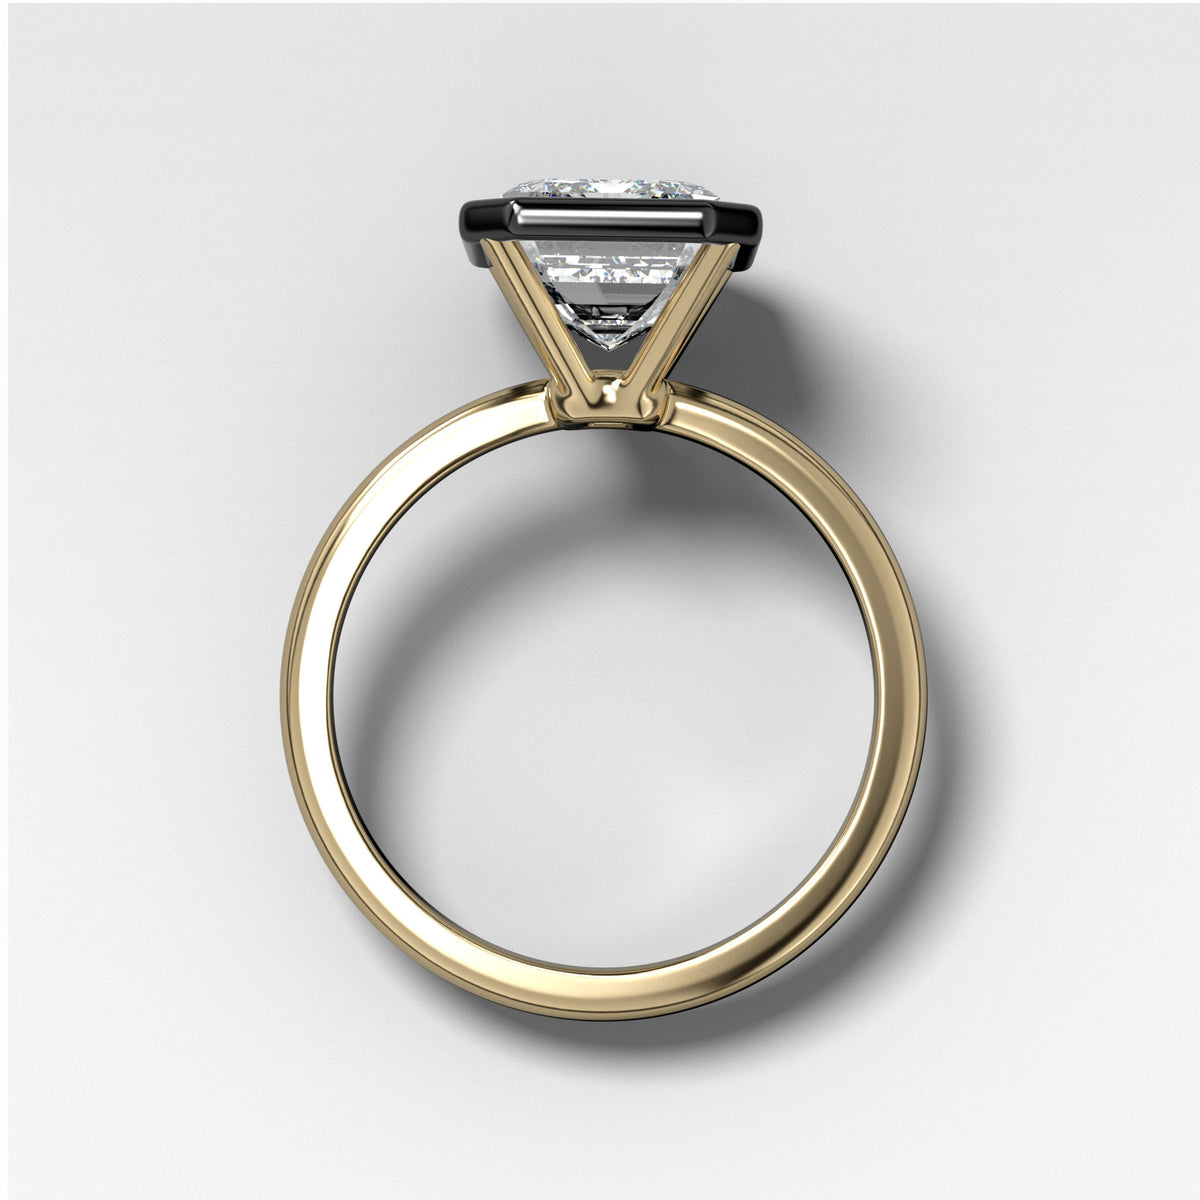 Blackened Penumbra Bezel Set Engagement Ring With Emerald Cut